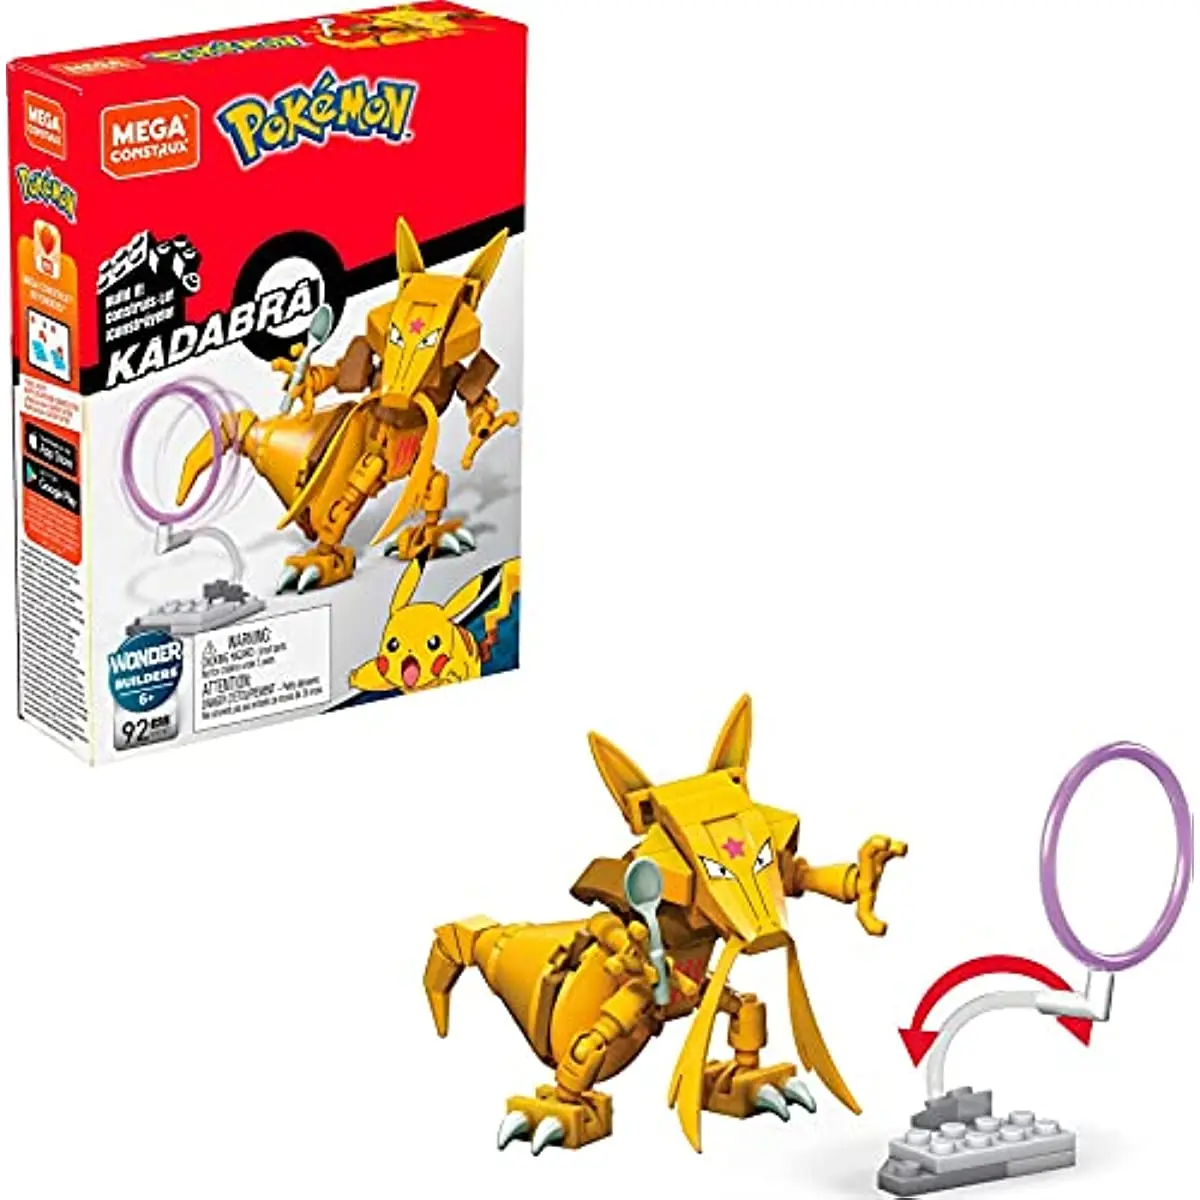 

Mega Construx Pokemon Power Pack Kadabra Construction Set with Character Figures Building Toys